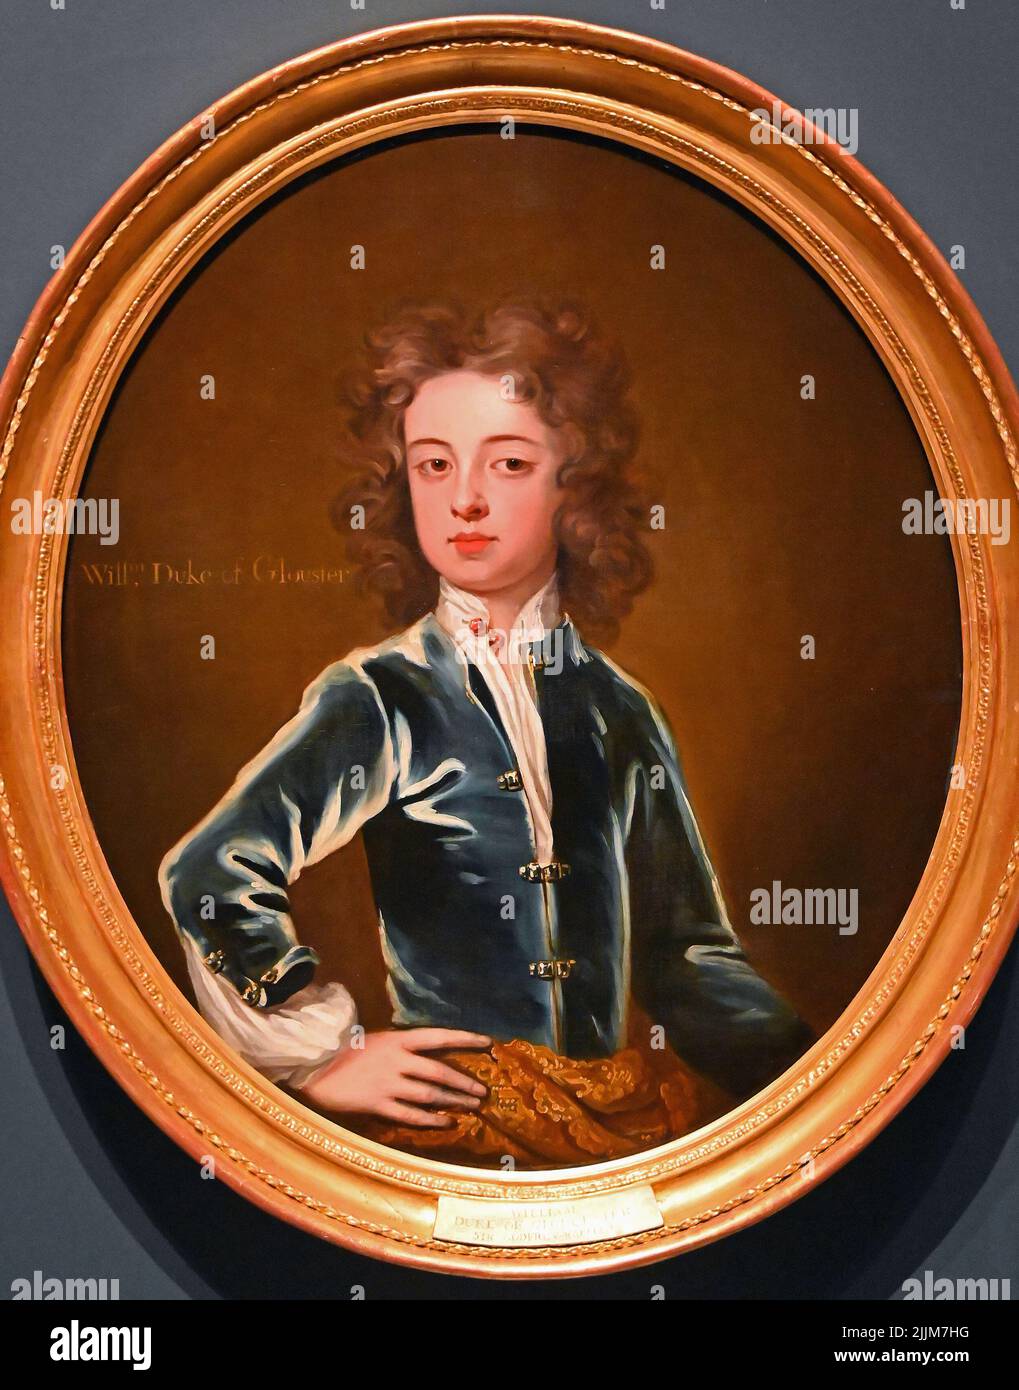 Guglielmo, duca di Gloucester, c1695. Attribuito a Charles d'Agar. Olio su tela. Foto Stock